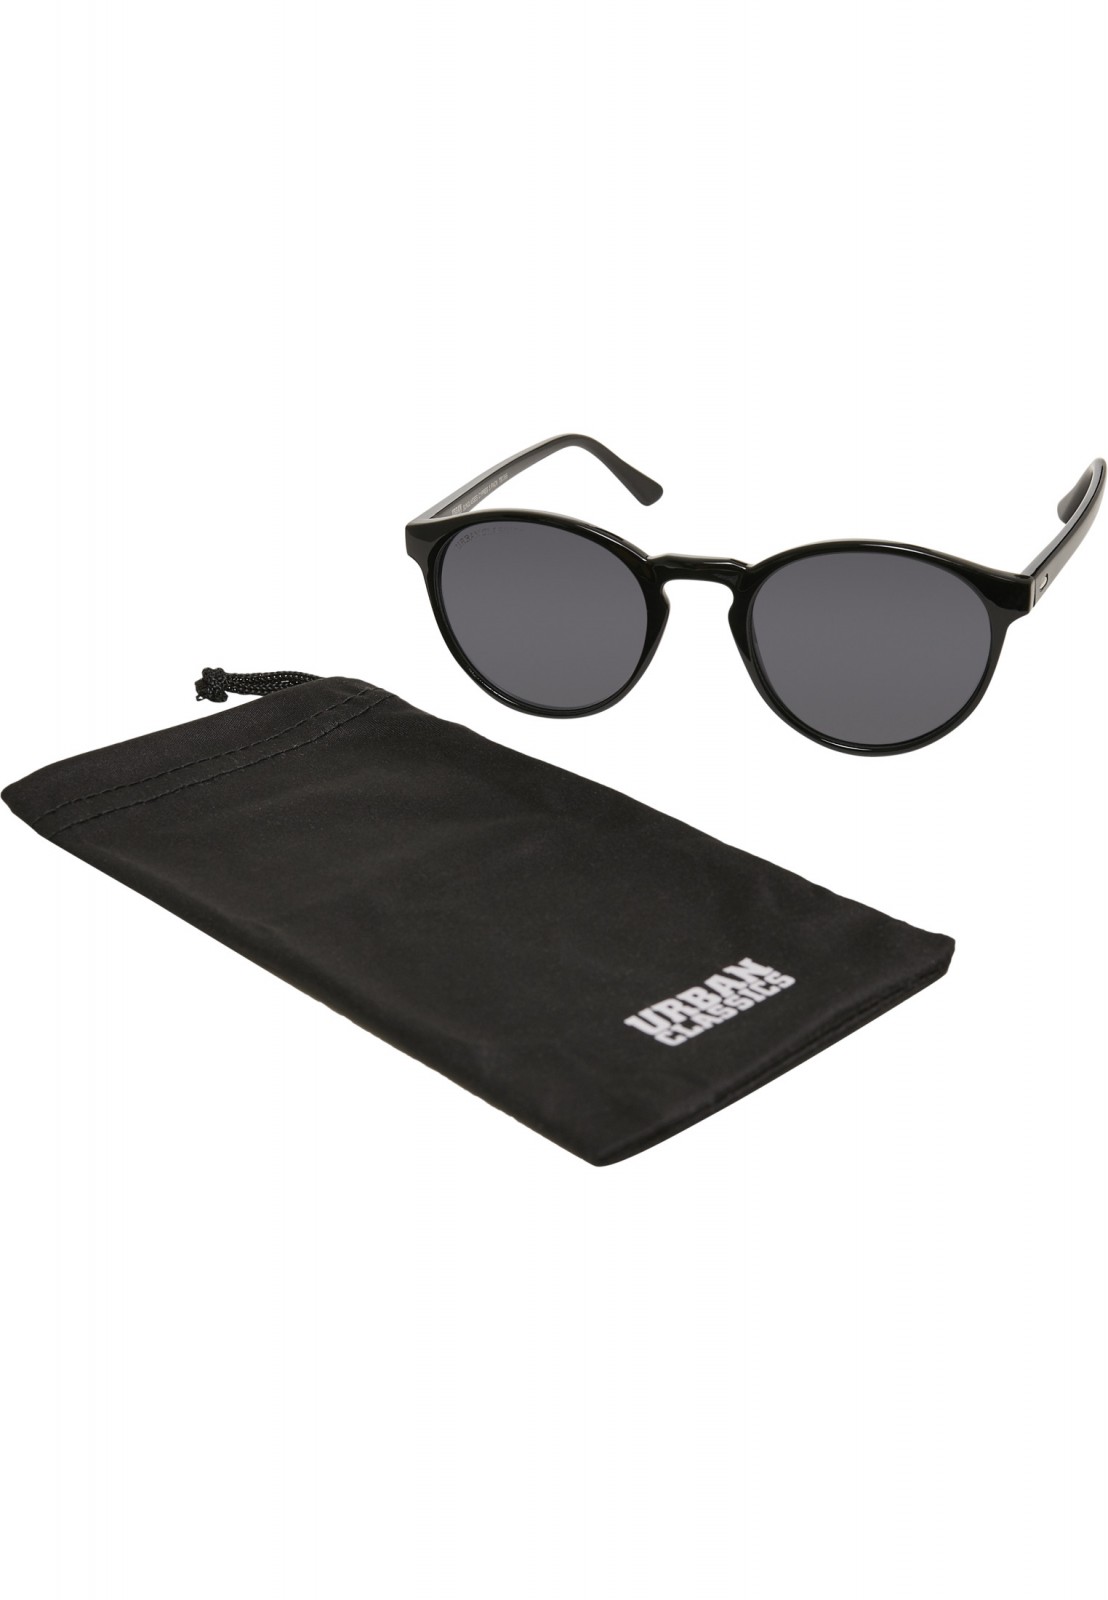 Urban Classics Sunglasses Cypress 3-Pack